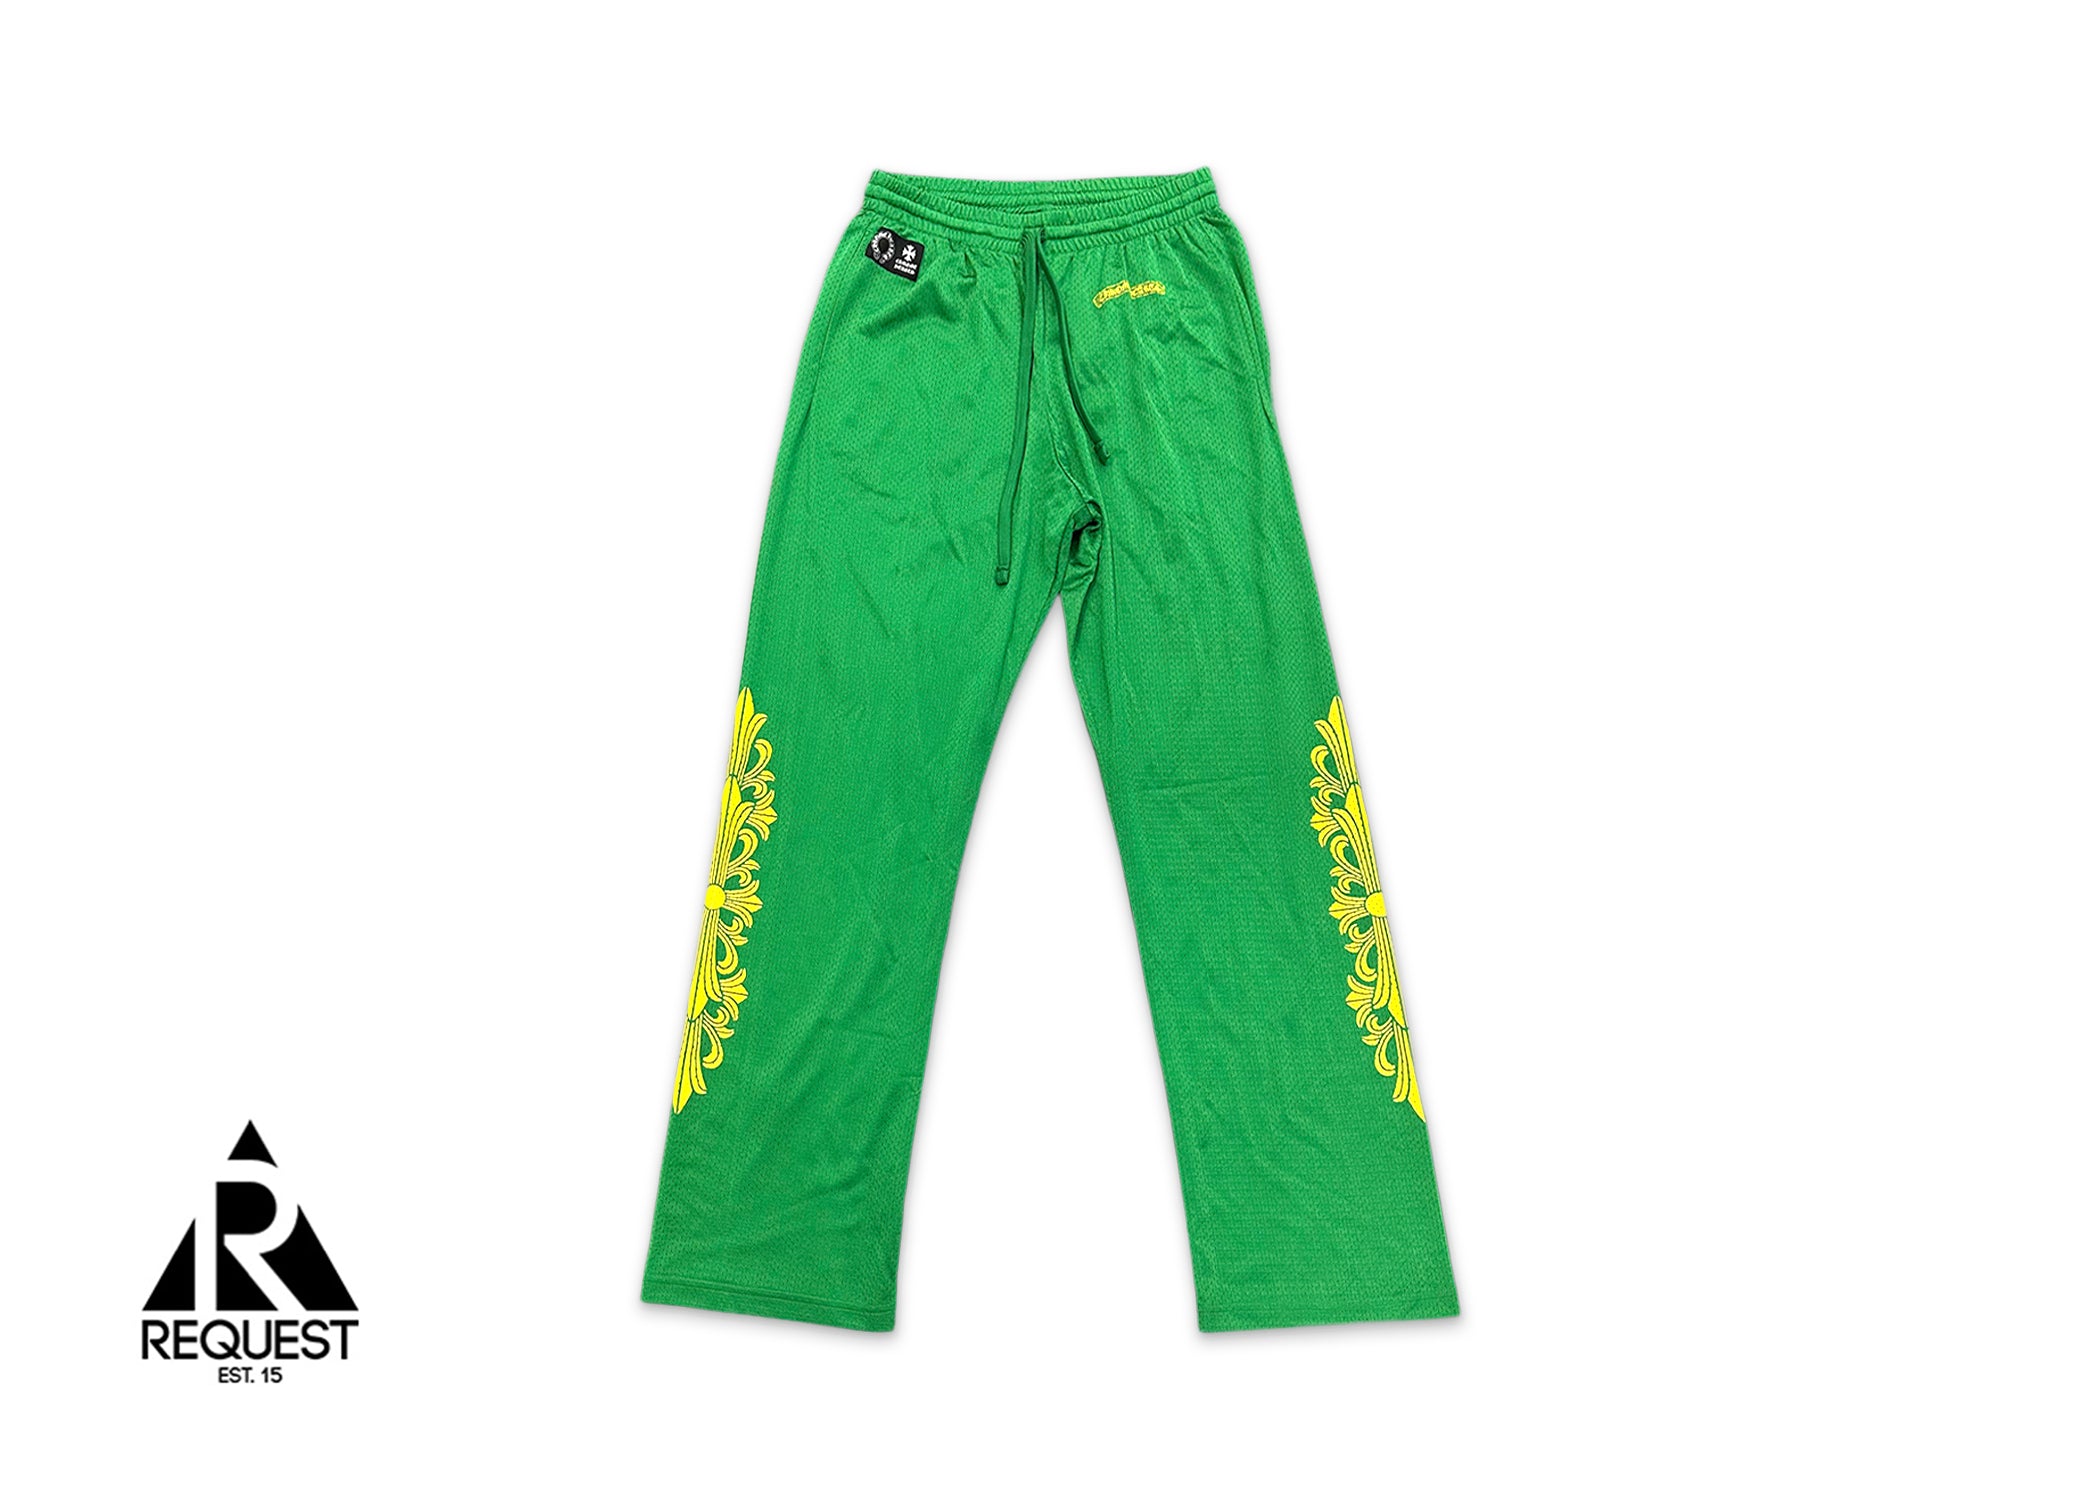 Chrome Hearts Sports Mesh Varsity Pants “Green/Yellow”